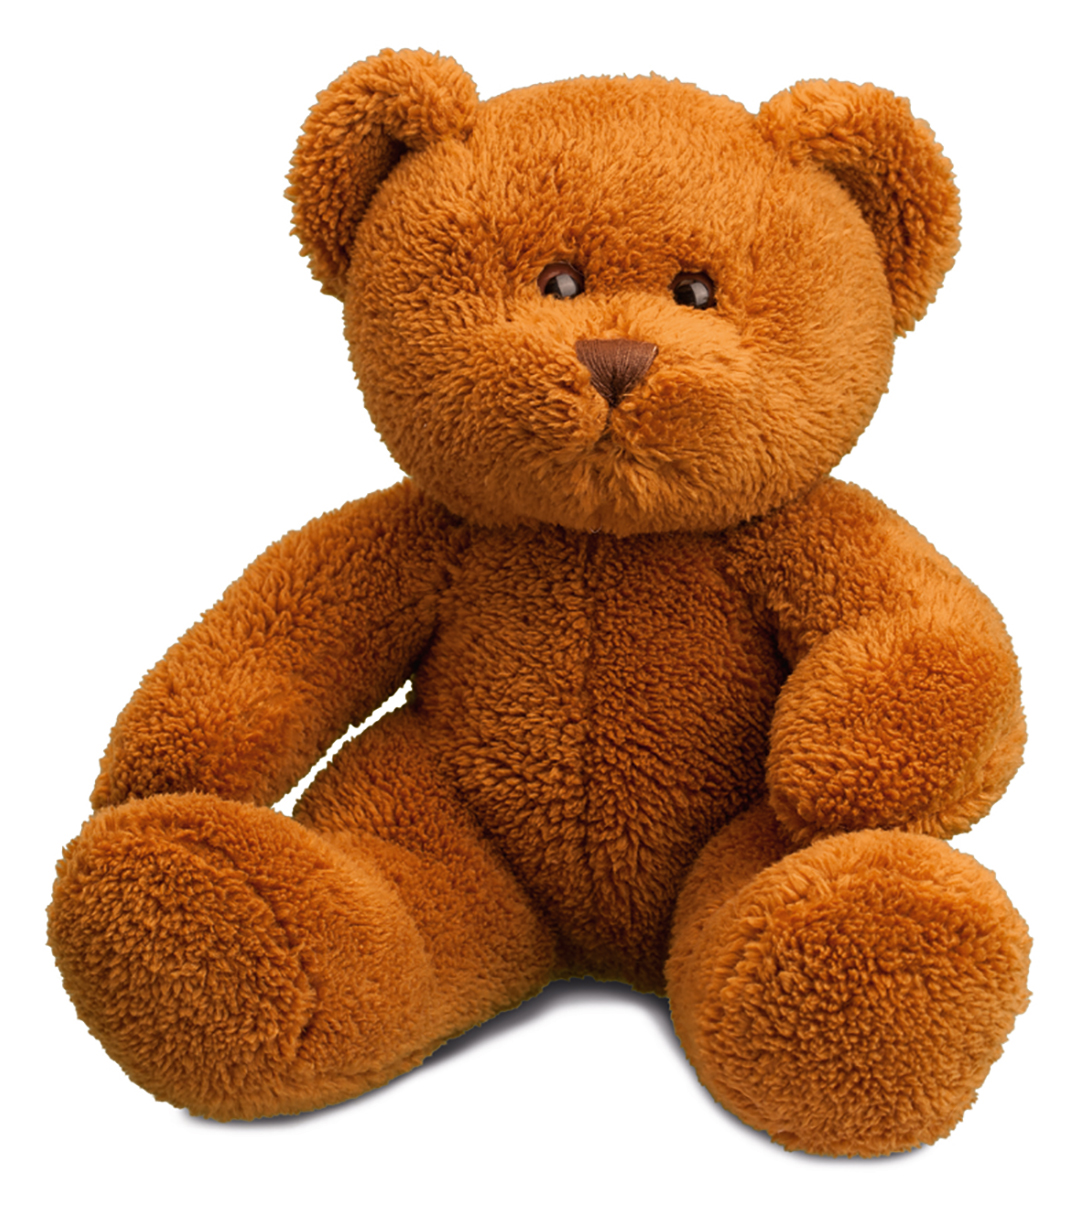 softplush teddy bear Michaela